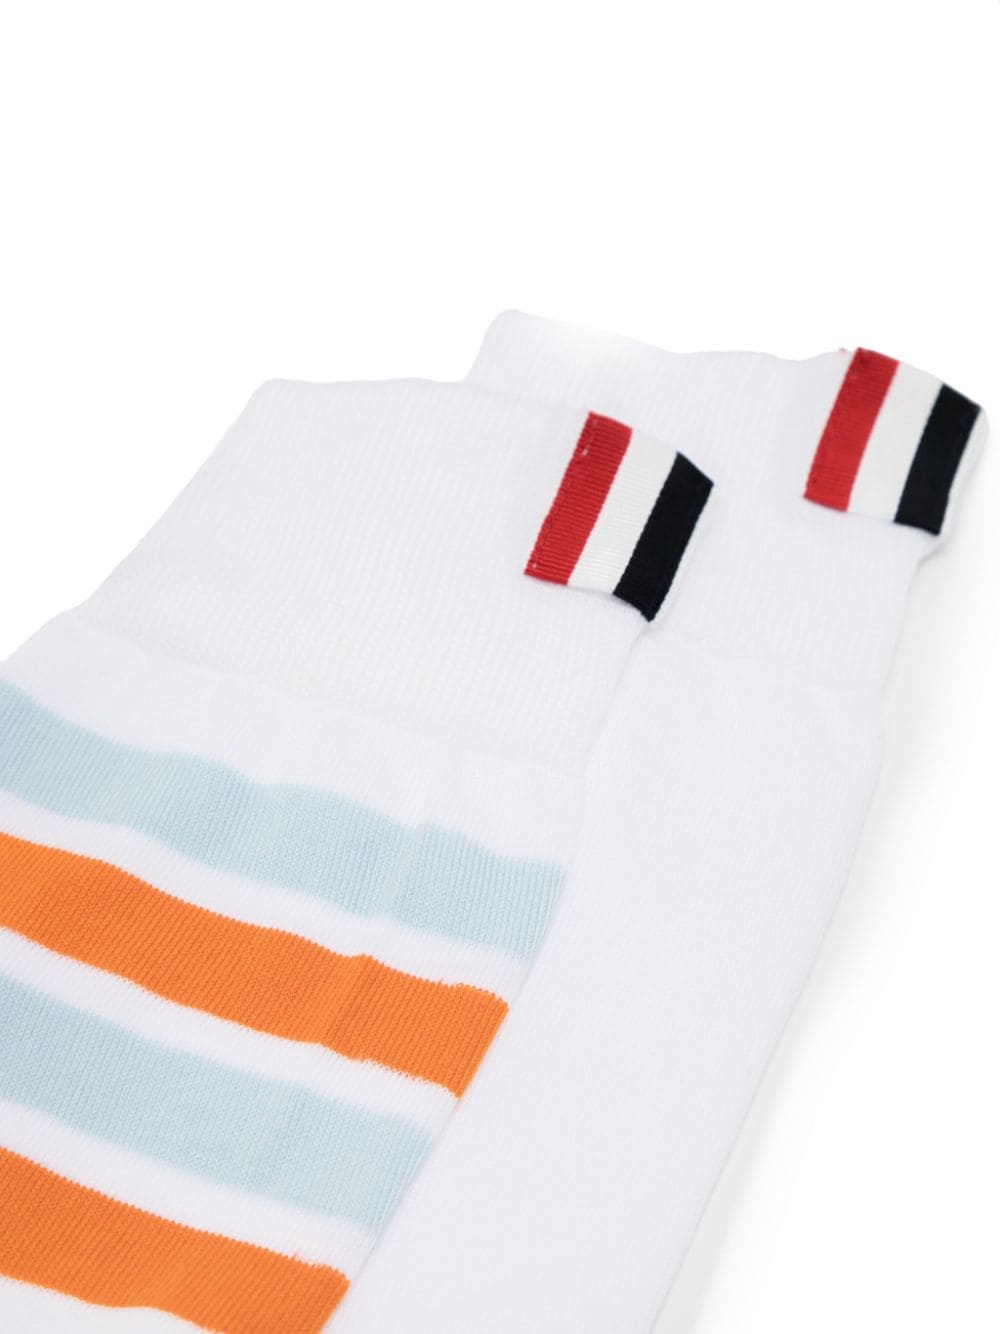 Mid Calf Socks In Cotton W/ 4 Bar Stripe White